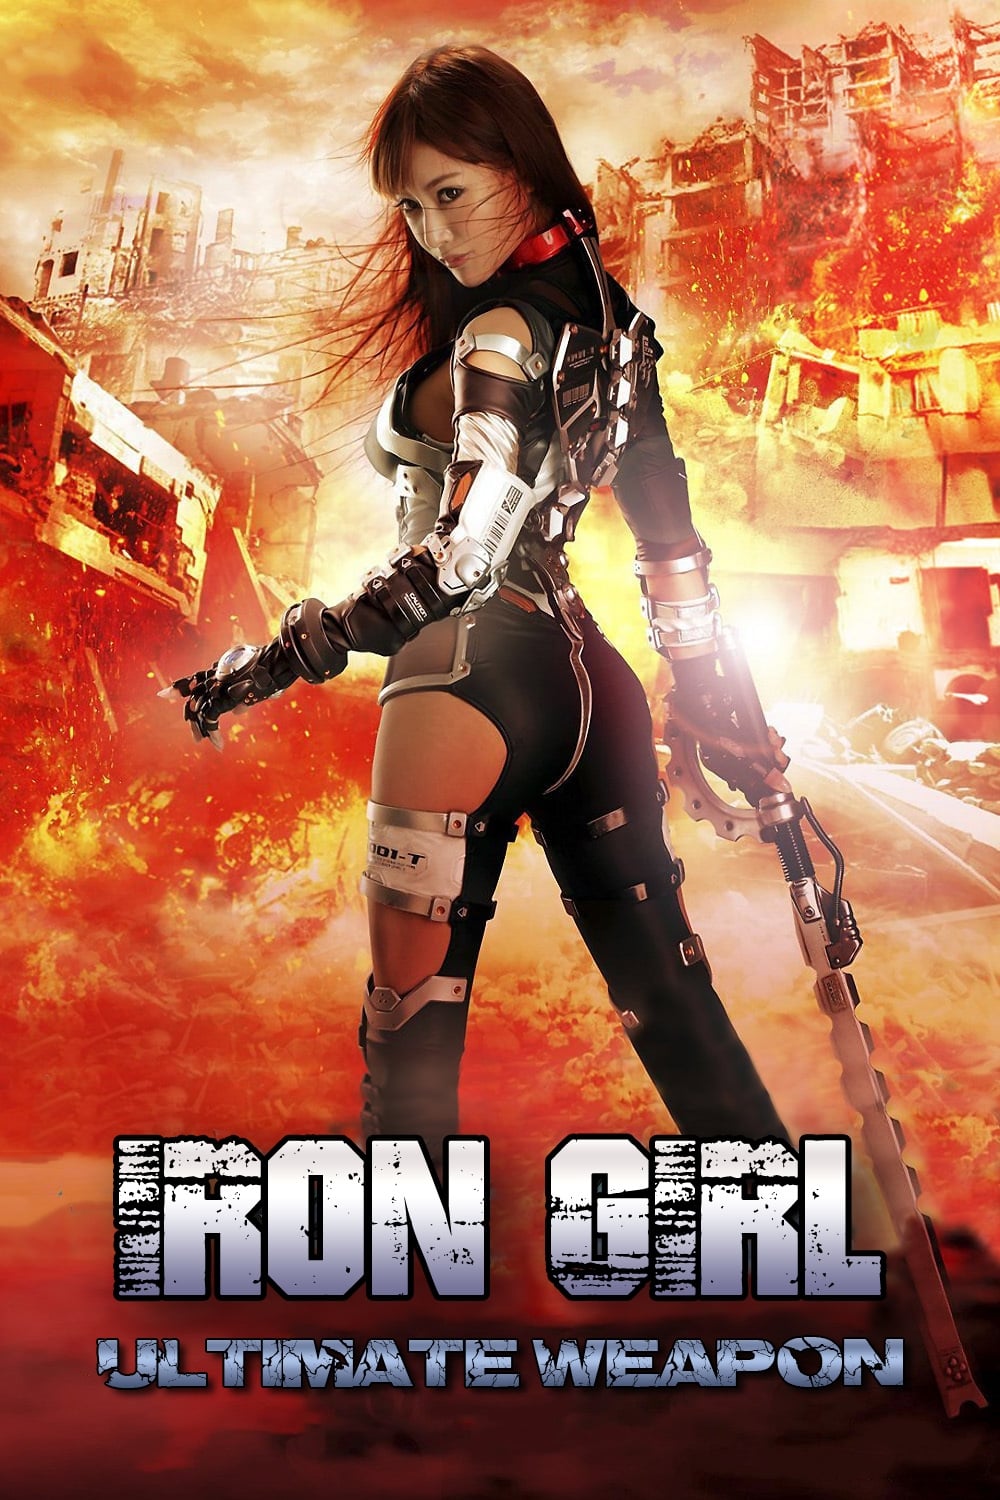 Iron Girl: Ultimate Weapon